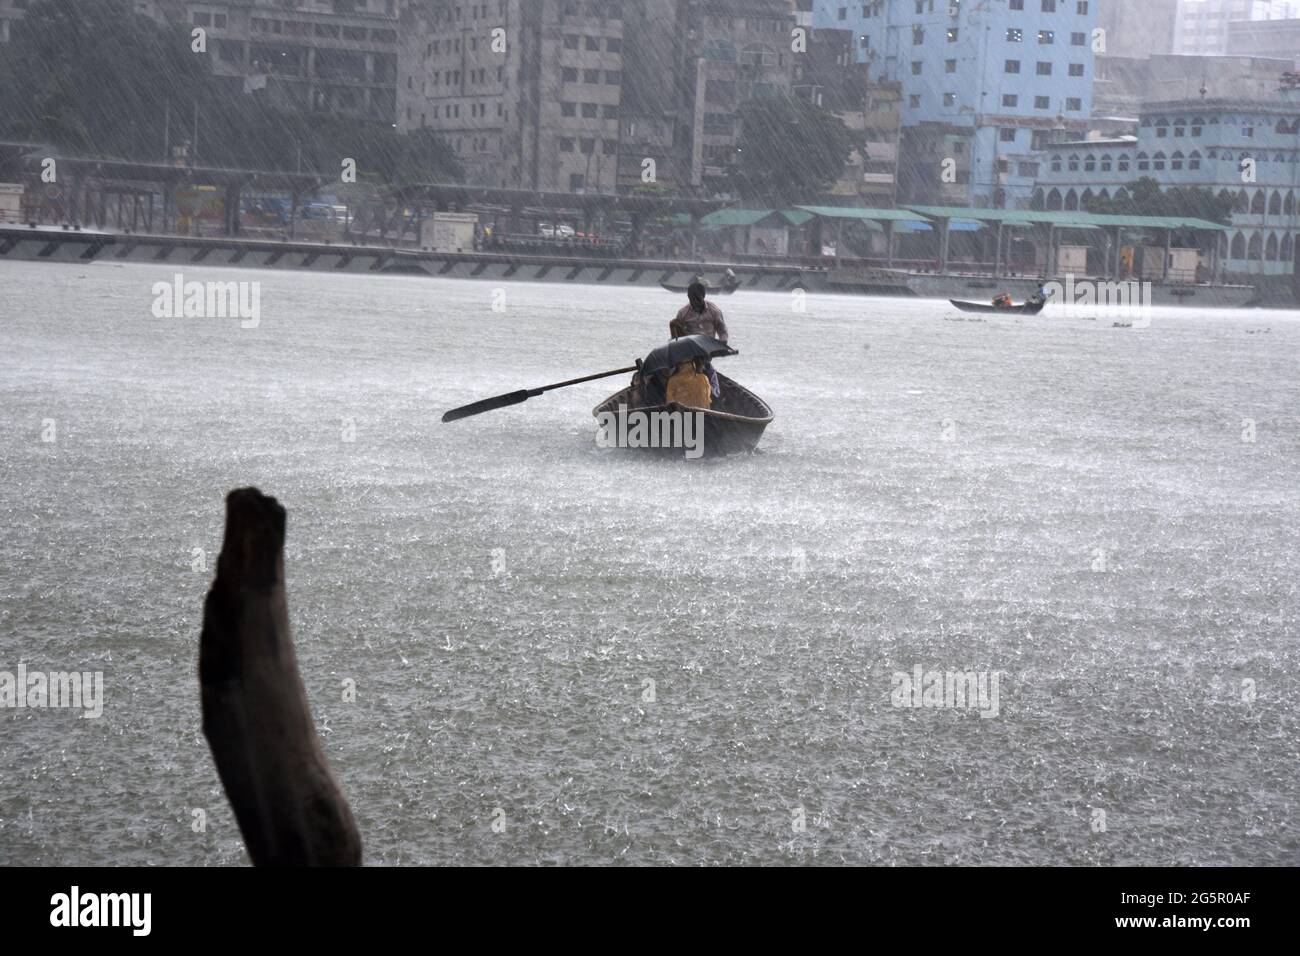 Bangladeshi commuters use boats to cross the Buriganga River during rain in Dhaka, Bangladesh on June 29, 2021. Stock Photo